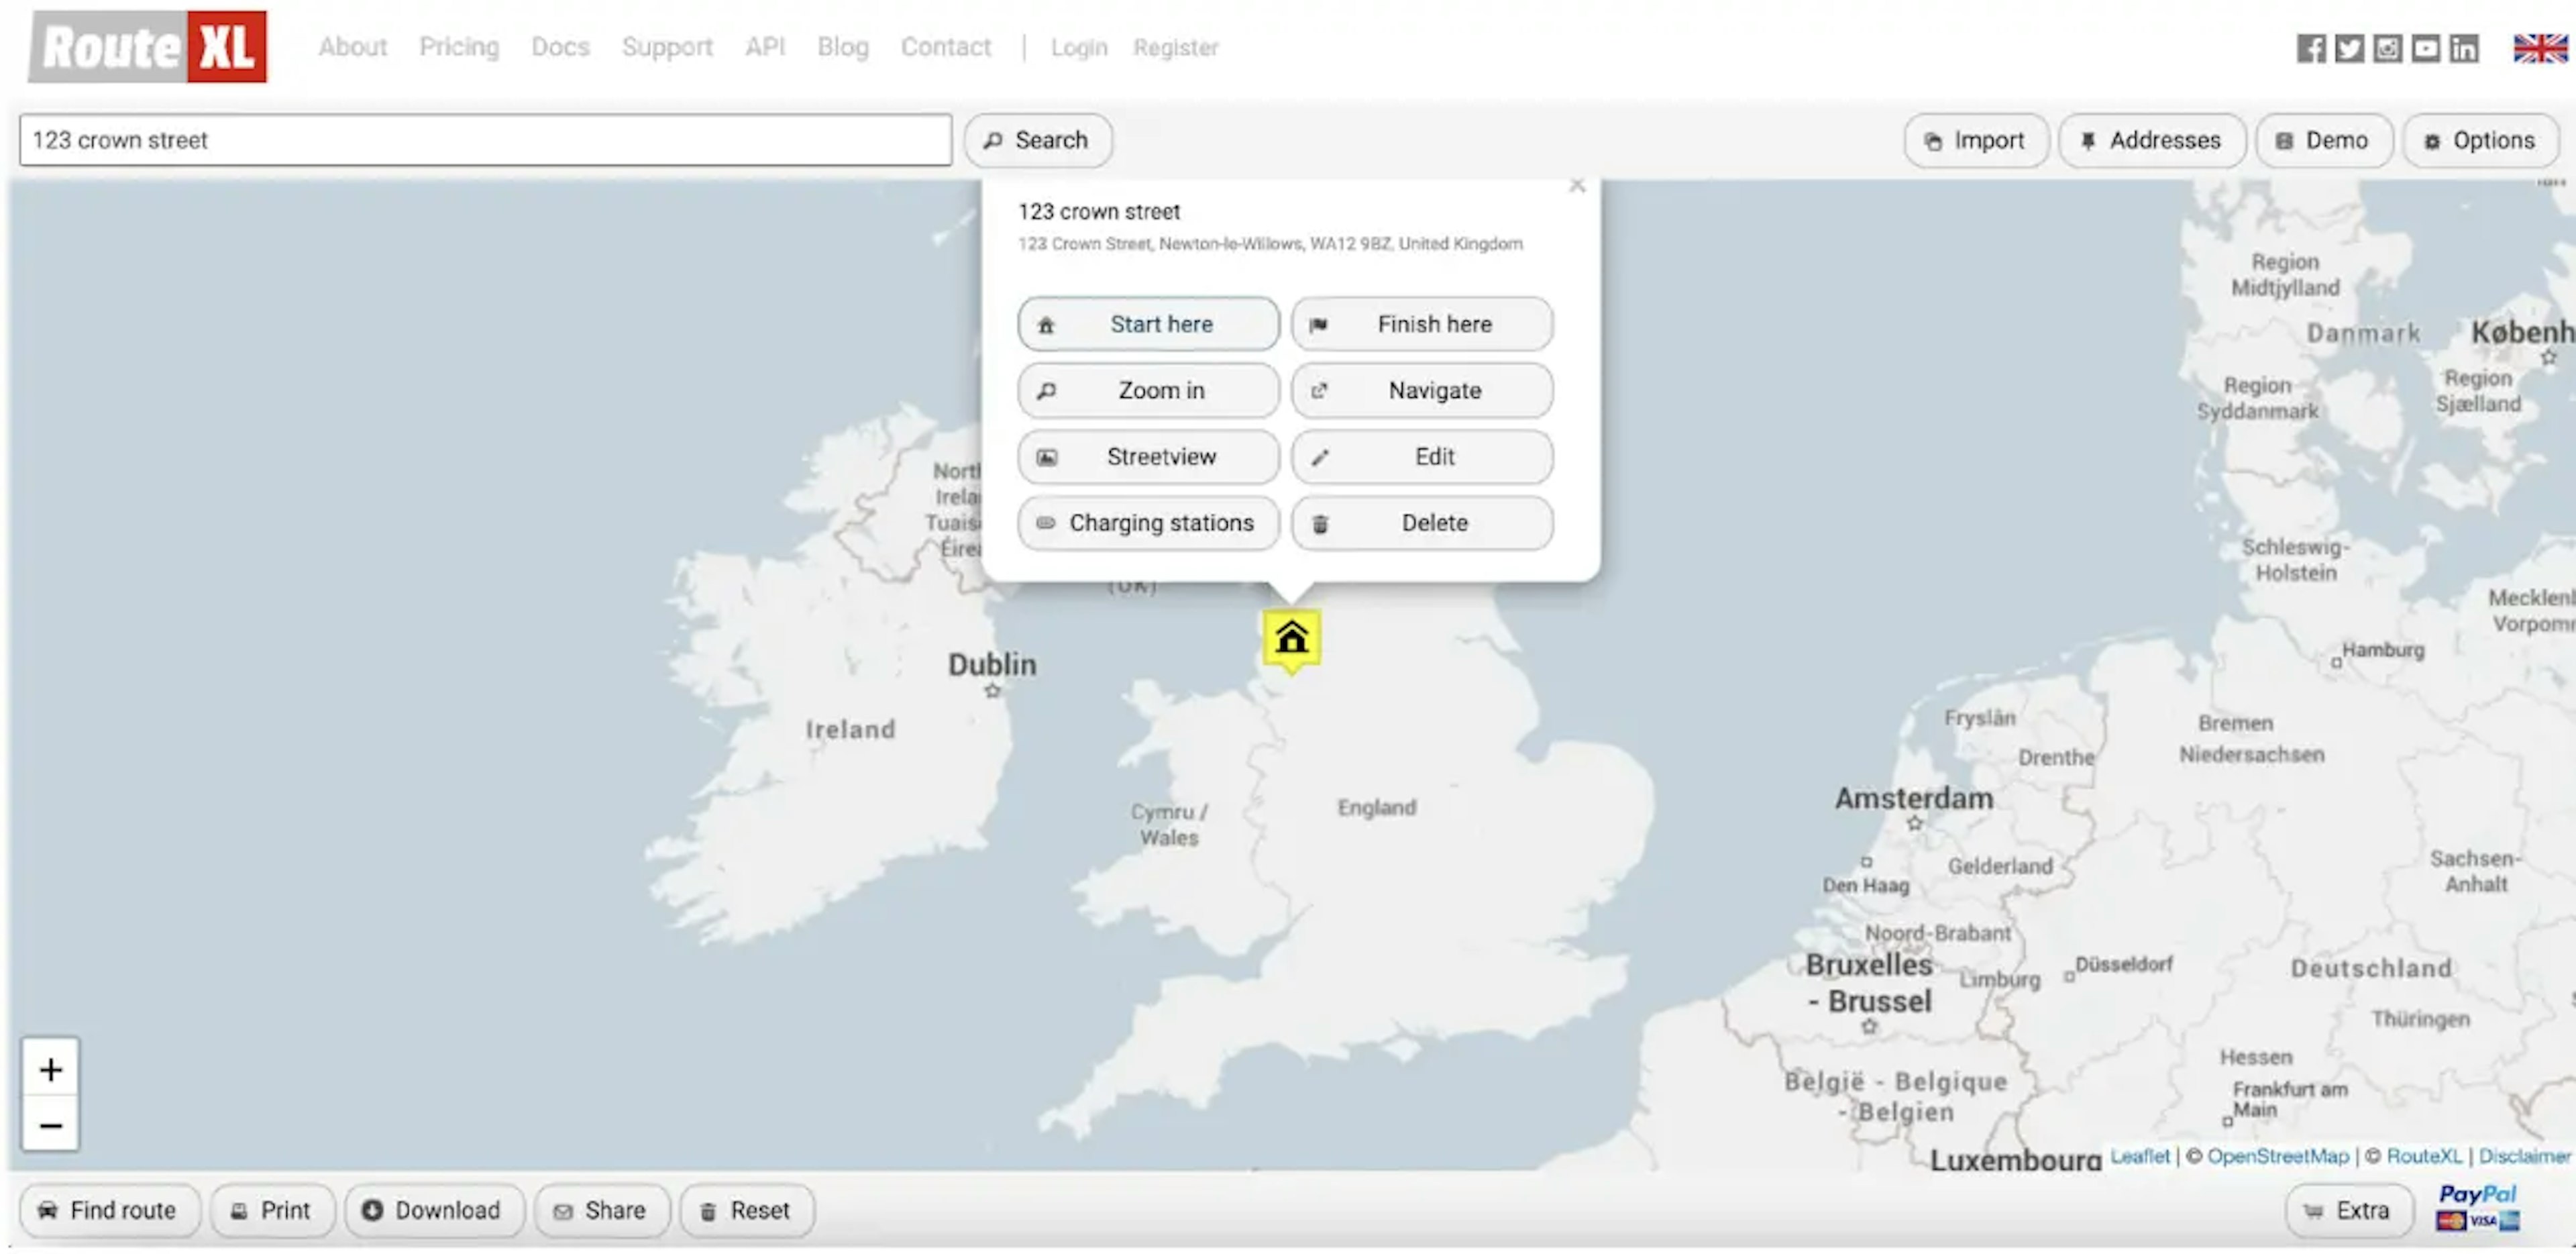 Screenshot of the RouteXL web app